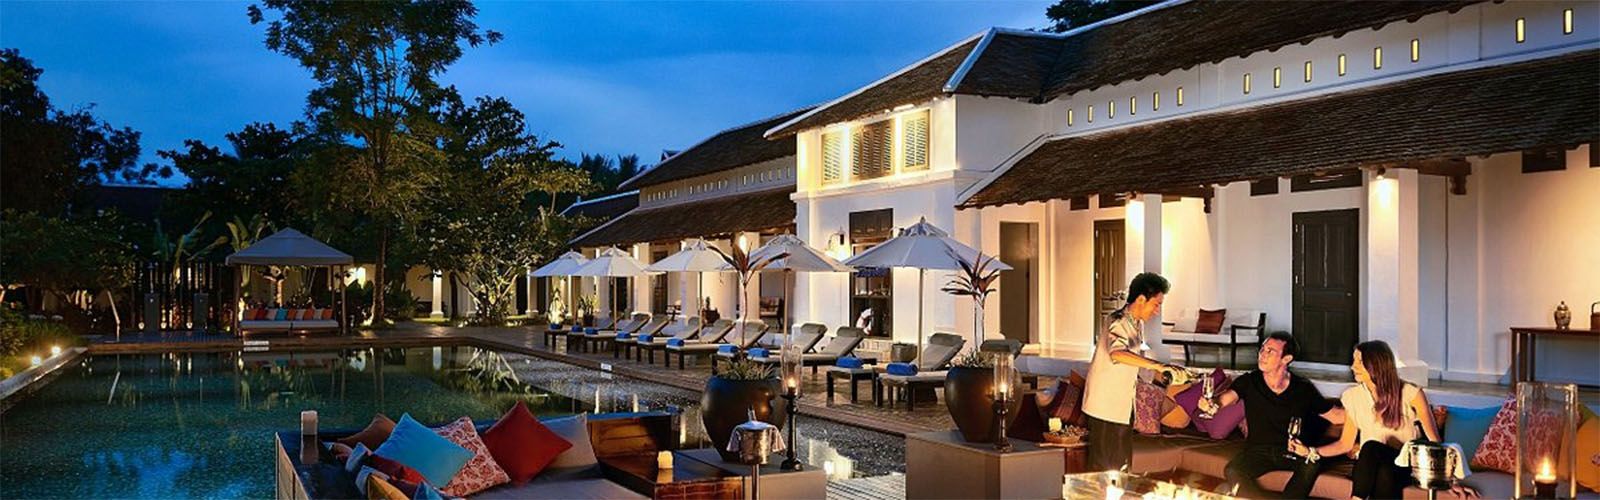 Top 10 Best Hotels In Laos | best place | Asianventure Tours